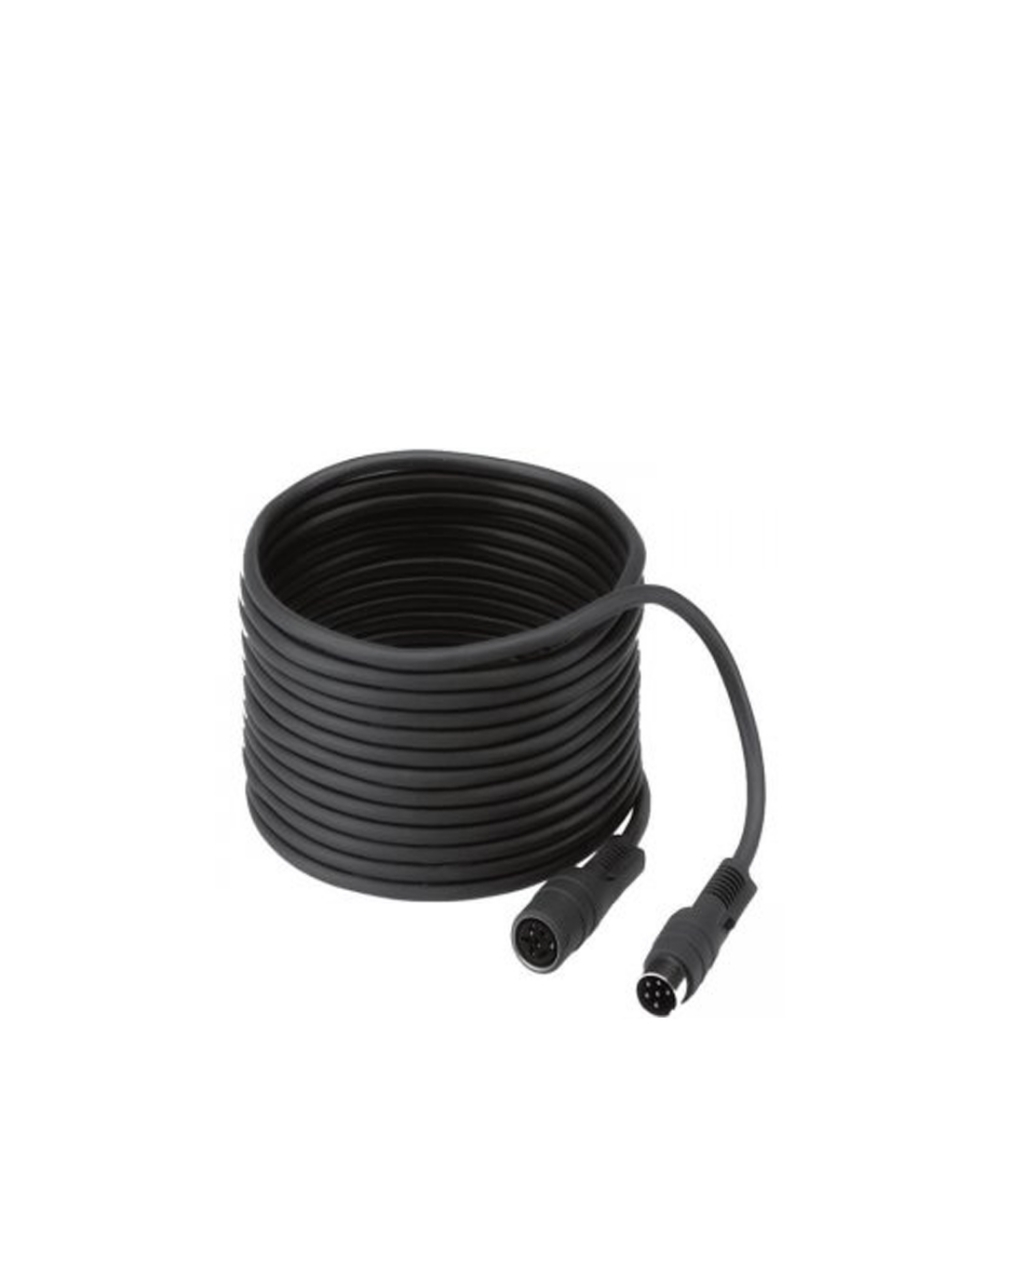 LBB 4116/05, 5M & LBB 4116/10, 10M –Extension Cable